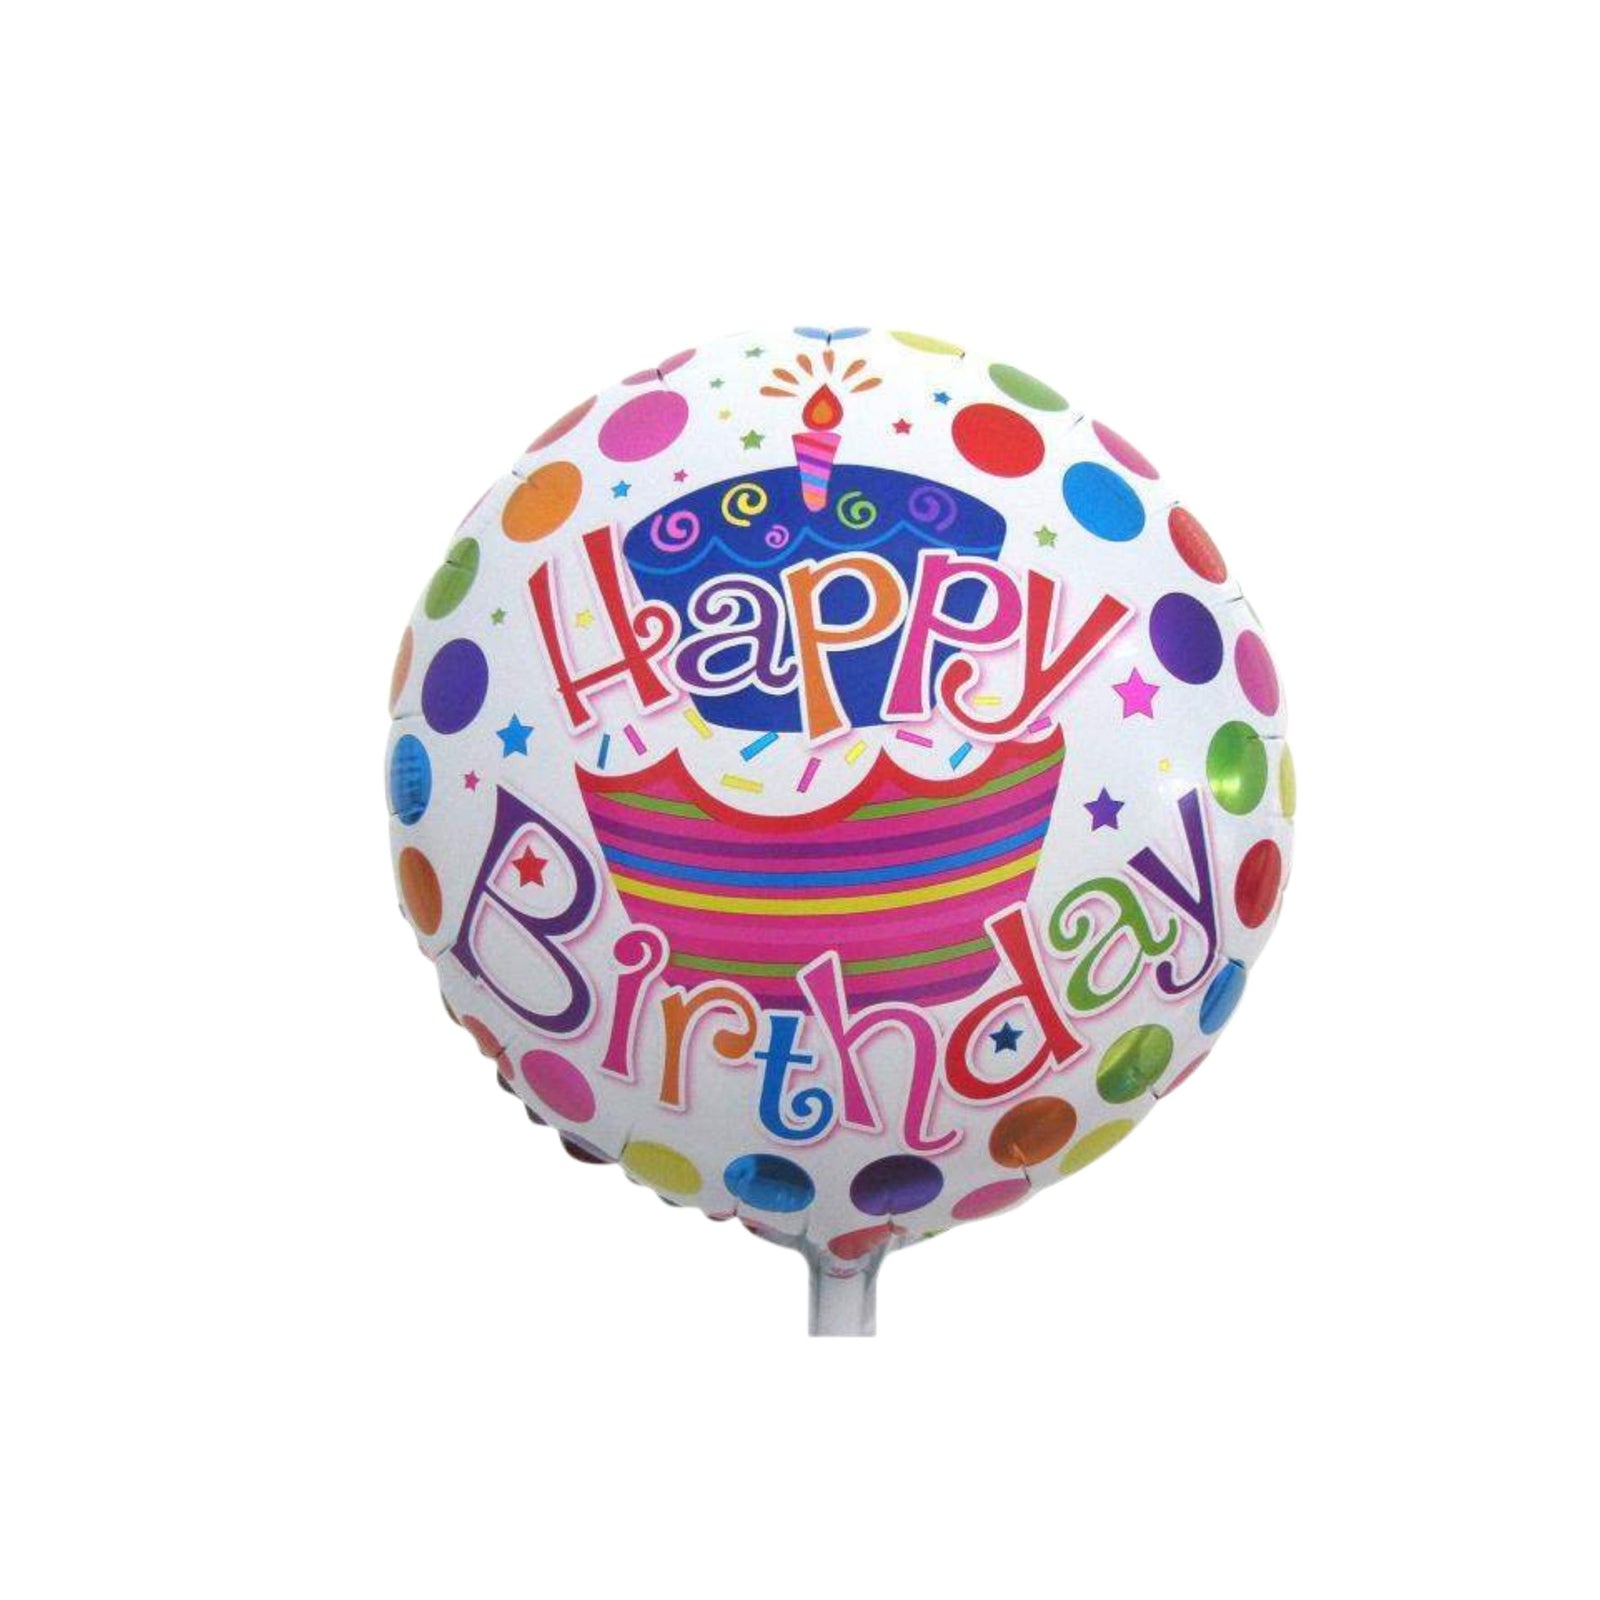 Printed Round Shape Cake Happy Birthday Foil Balloon